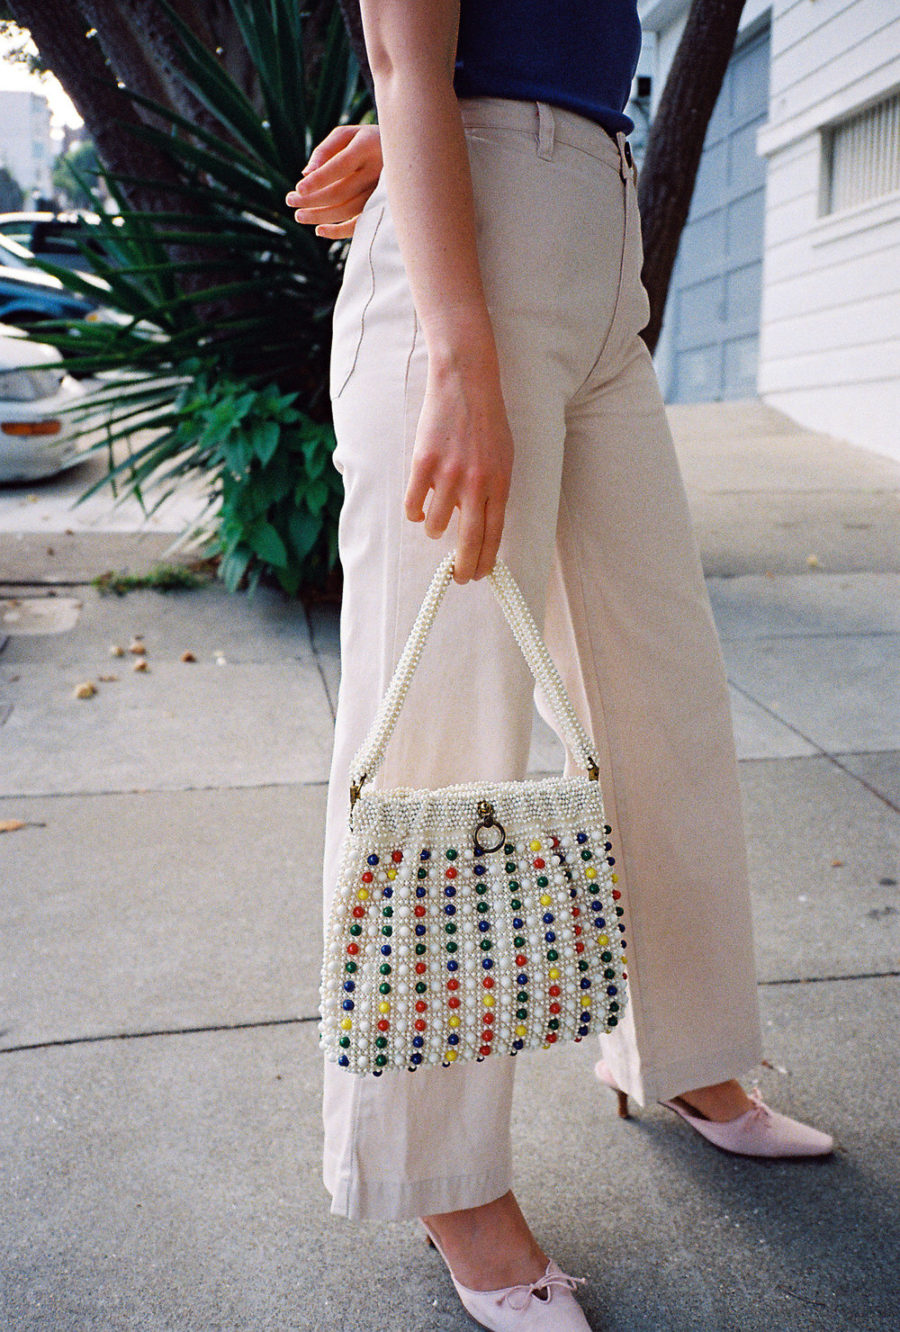 Summer Handbag Styles to Elevate Your Look - beaded bag, top handbag trends // Notjessfashion.com